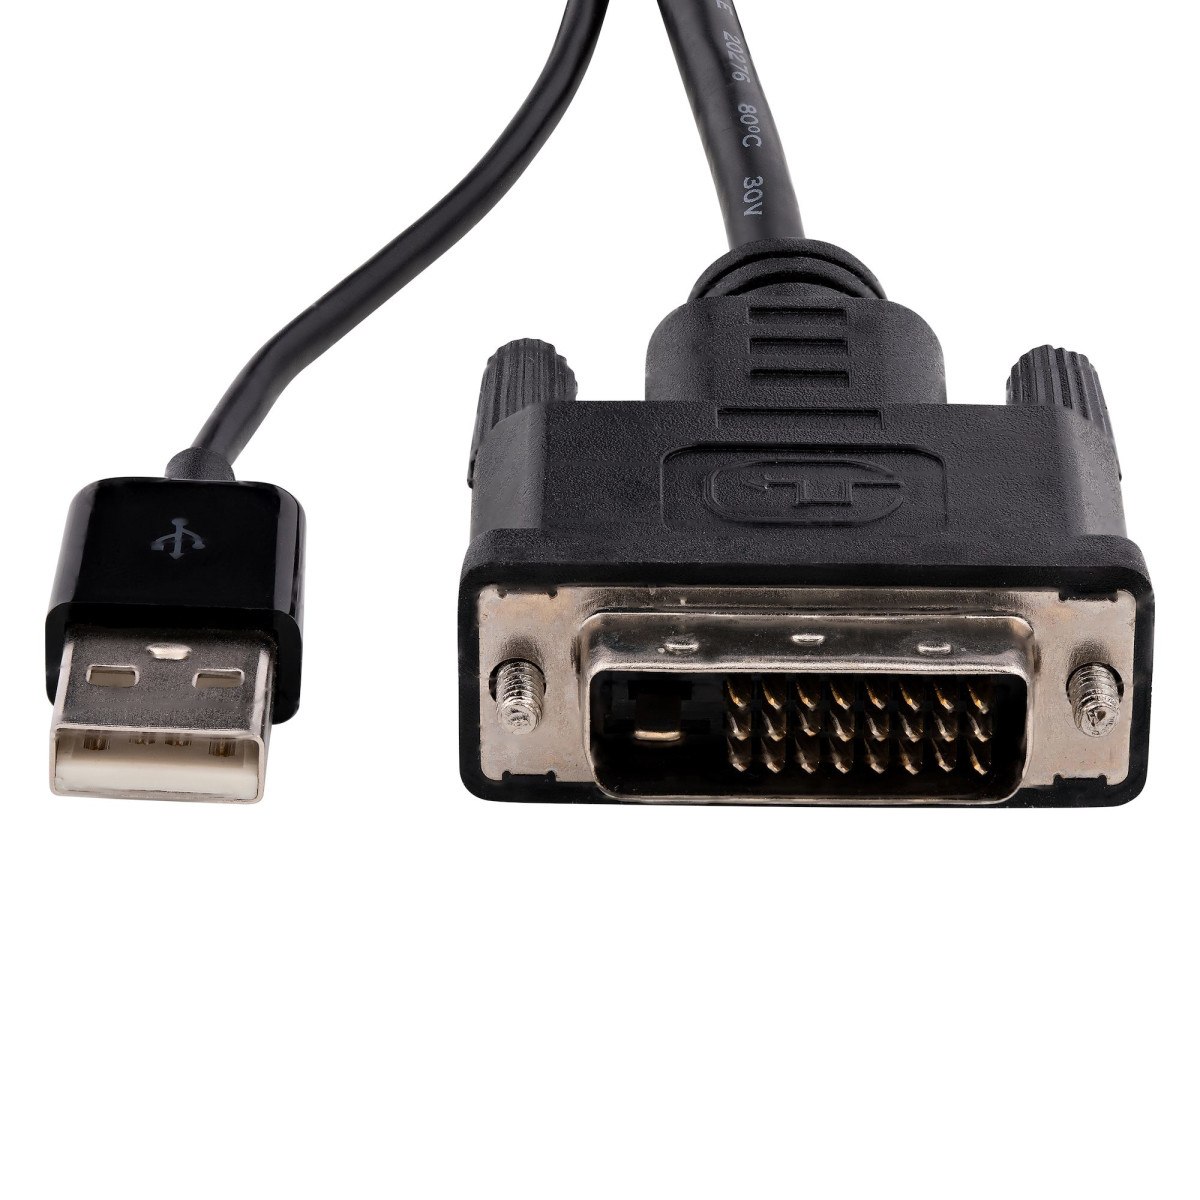 DVI to DisplayPort Adapter - USB Power